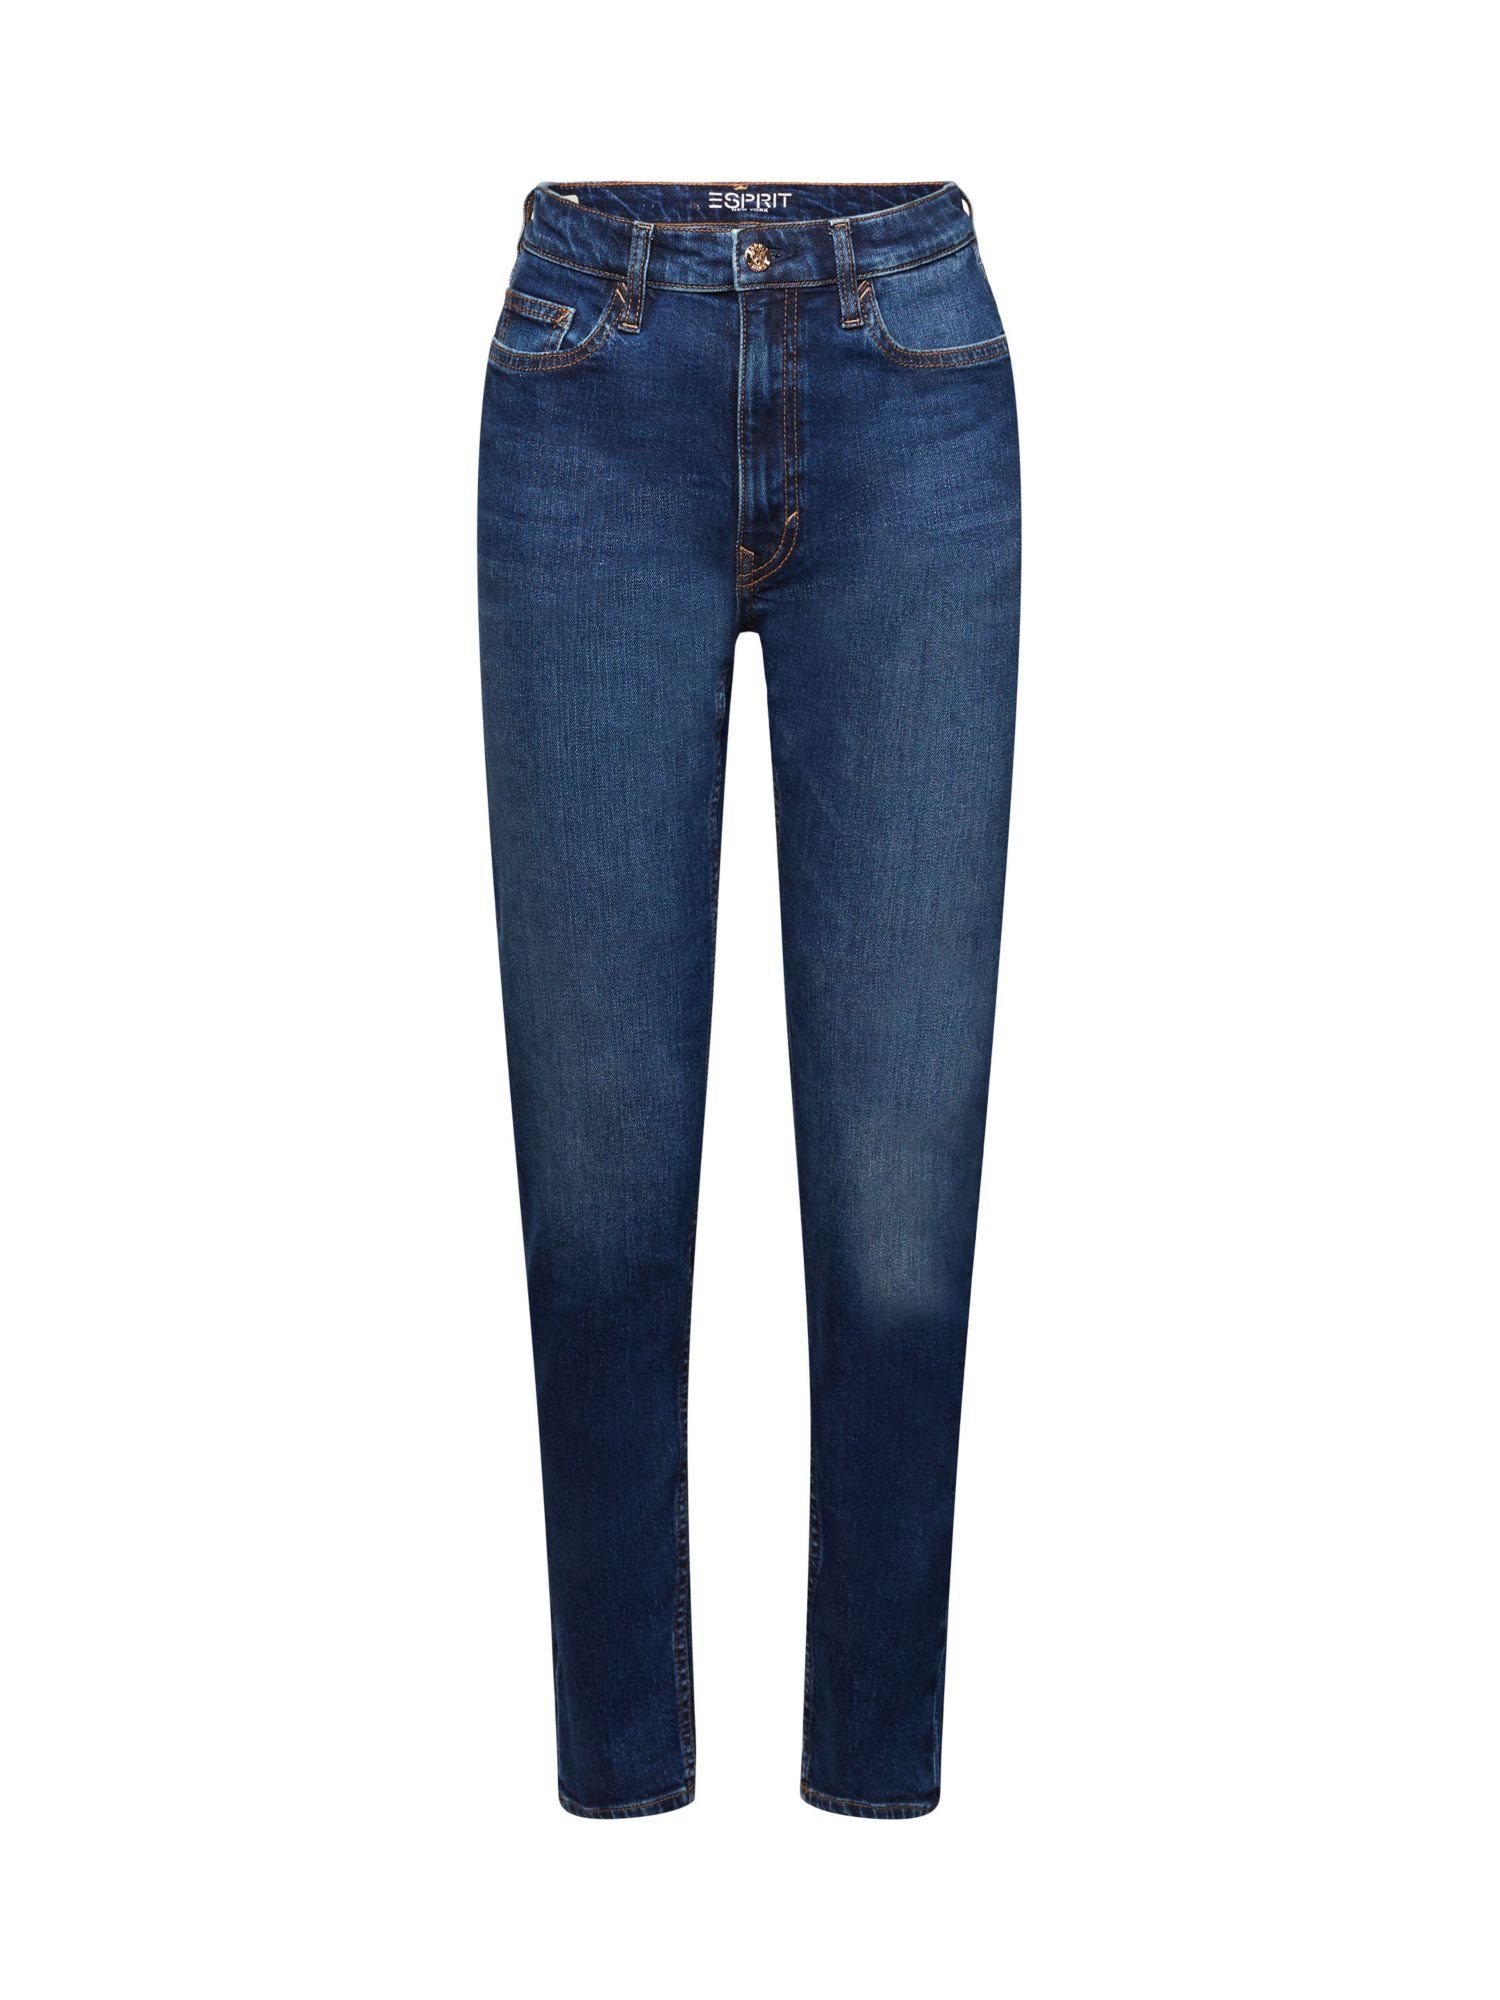 mit Jeans Bund hohem Esprit Bequeme Retro-Classic-Jeans